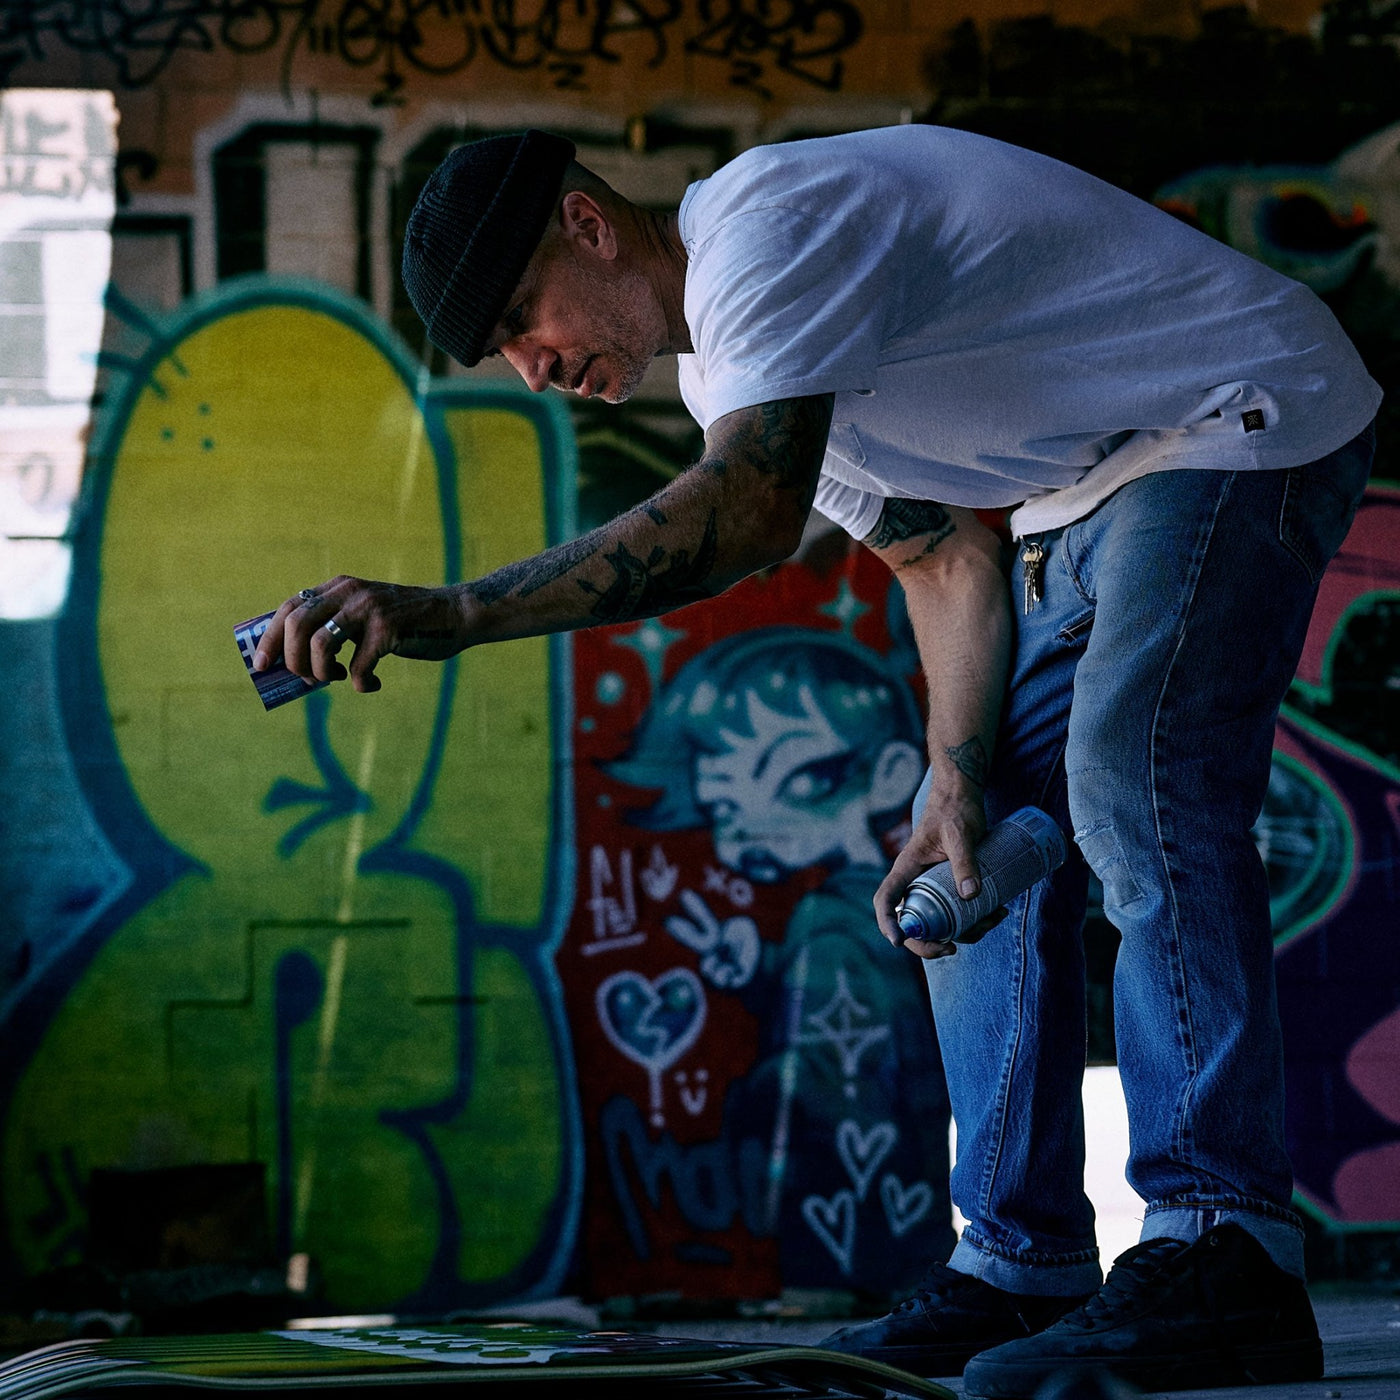 Jamie Thomas splashing paint onto a skateboard on the ground